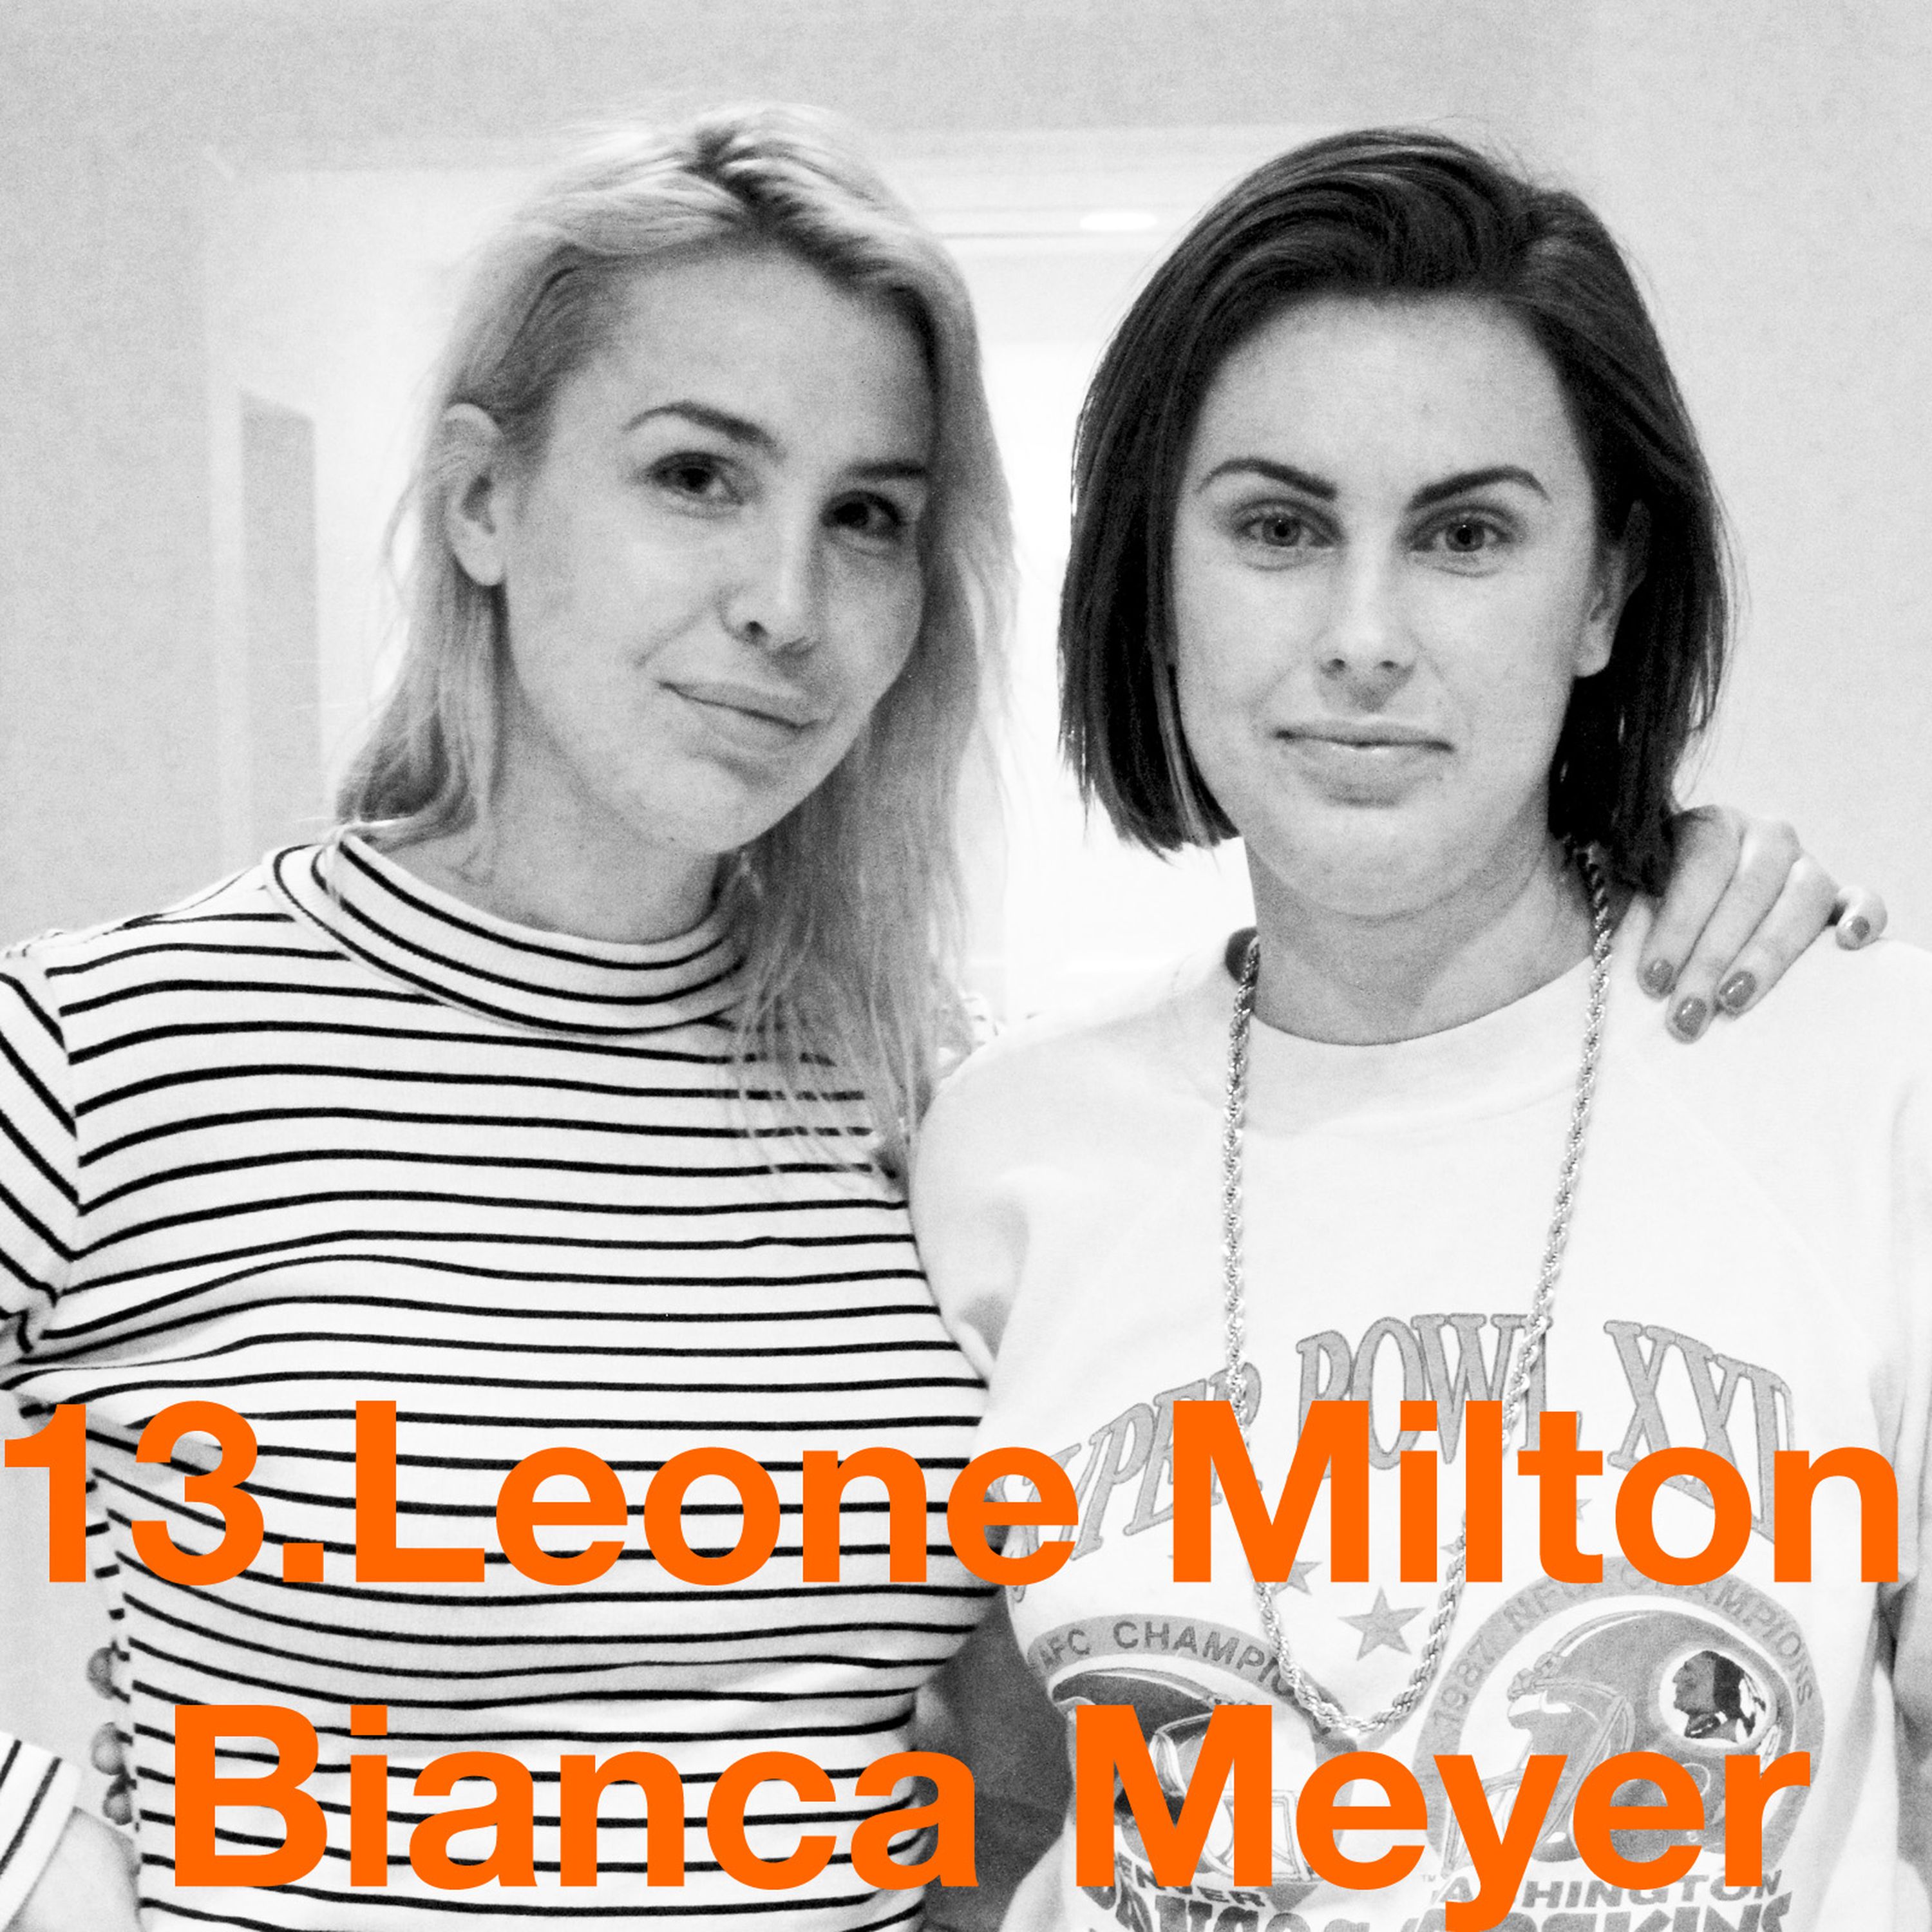 13.Leone Milton & Bianca Meyer